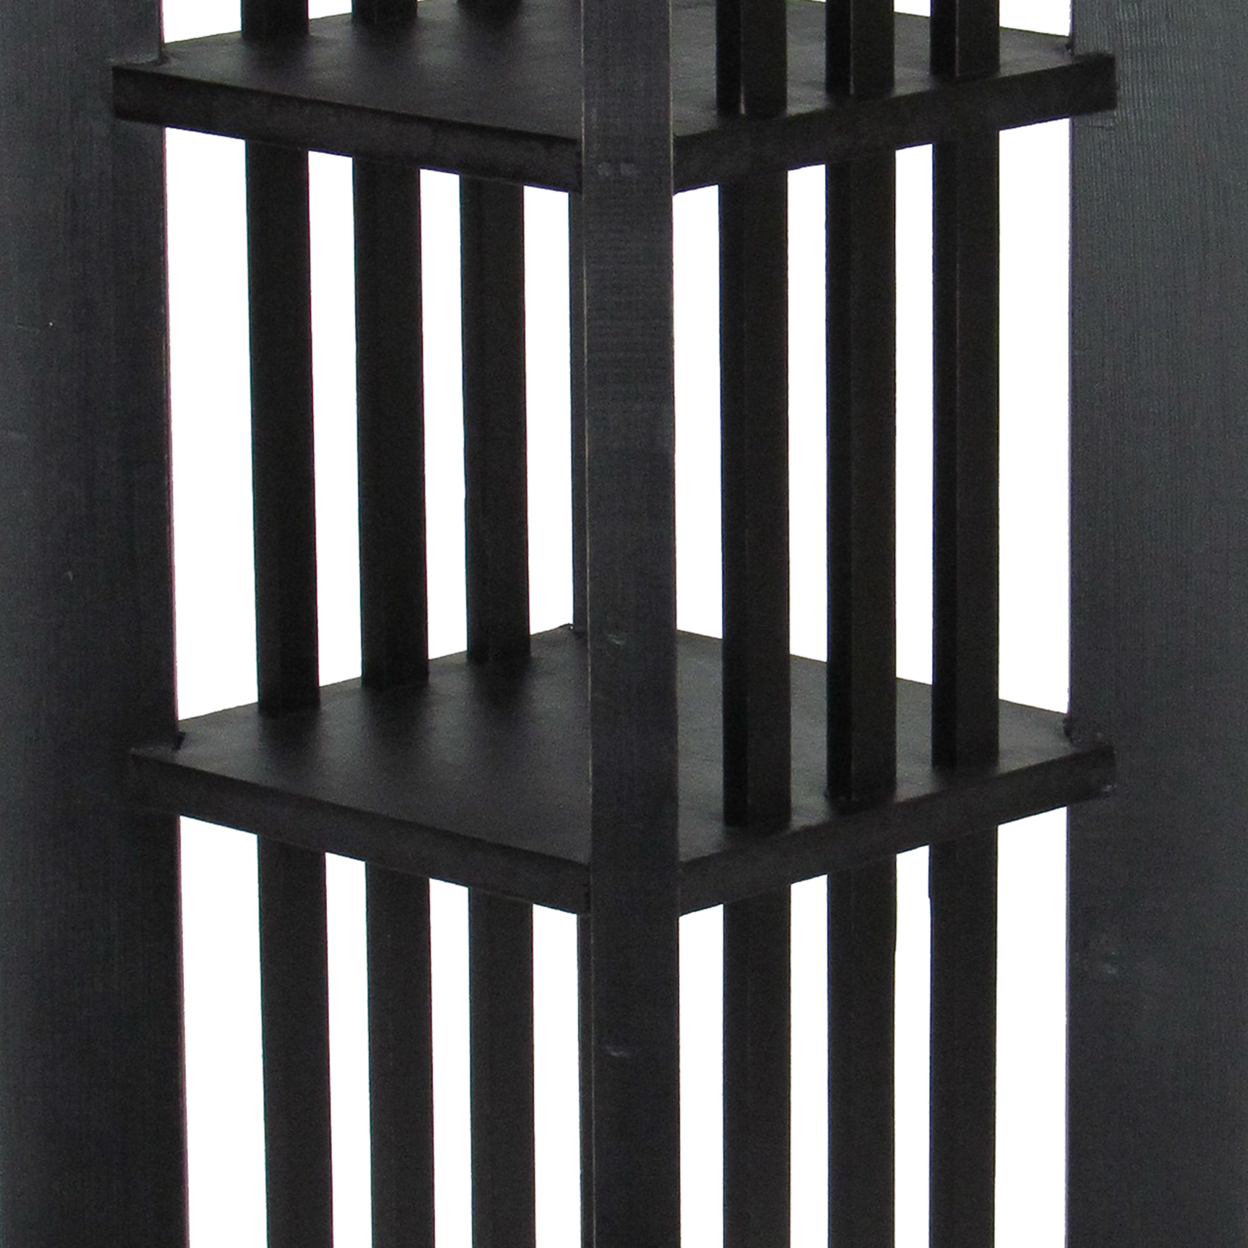 Koy 36 Inch Pedestal Stand, Wood, 3 Open Bottom Shelves, Antique Black